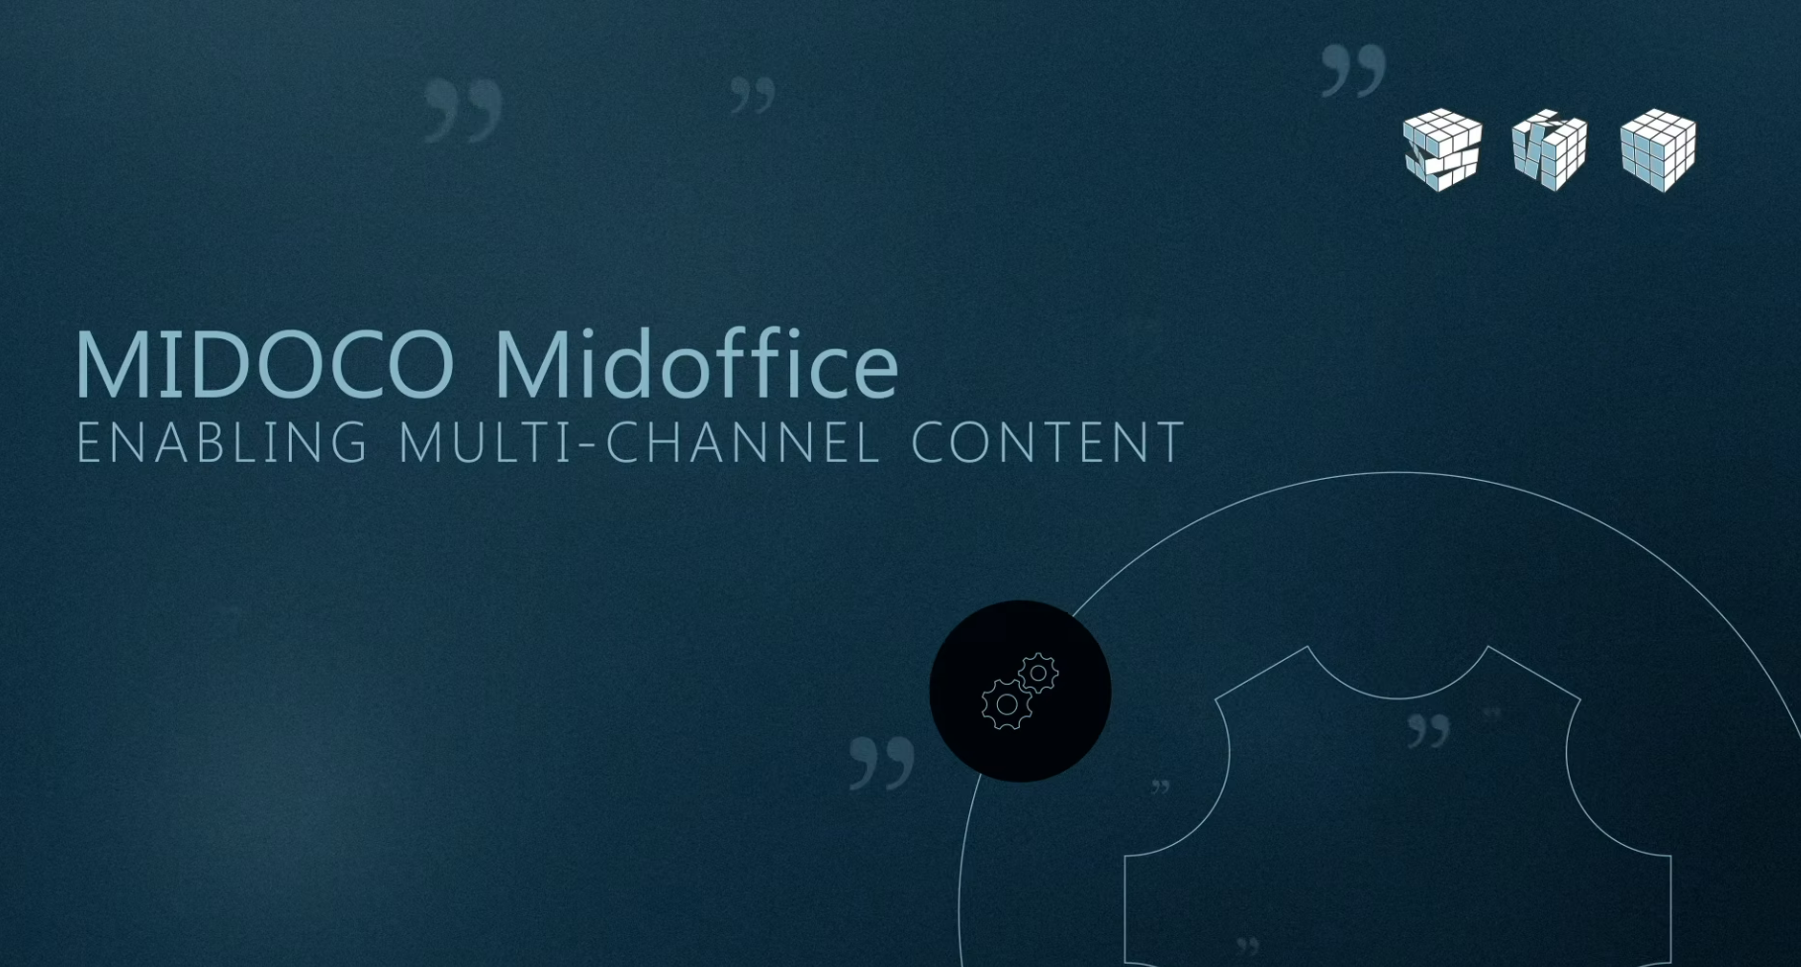 Midoco Midoffice - Enabling multi-channel content